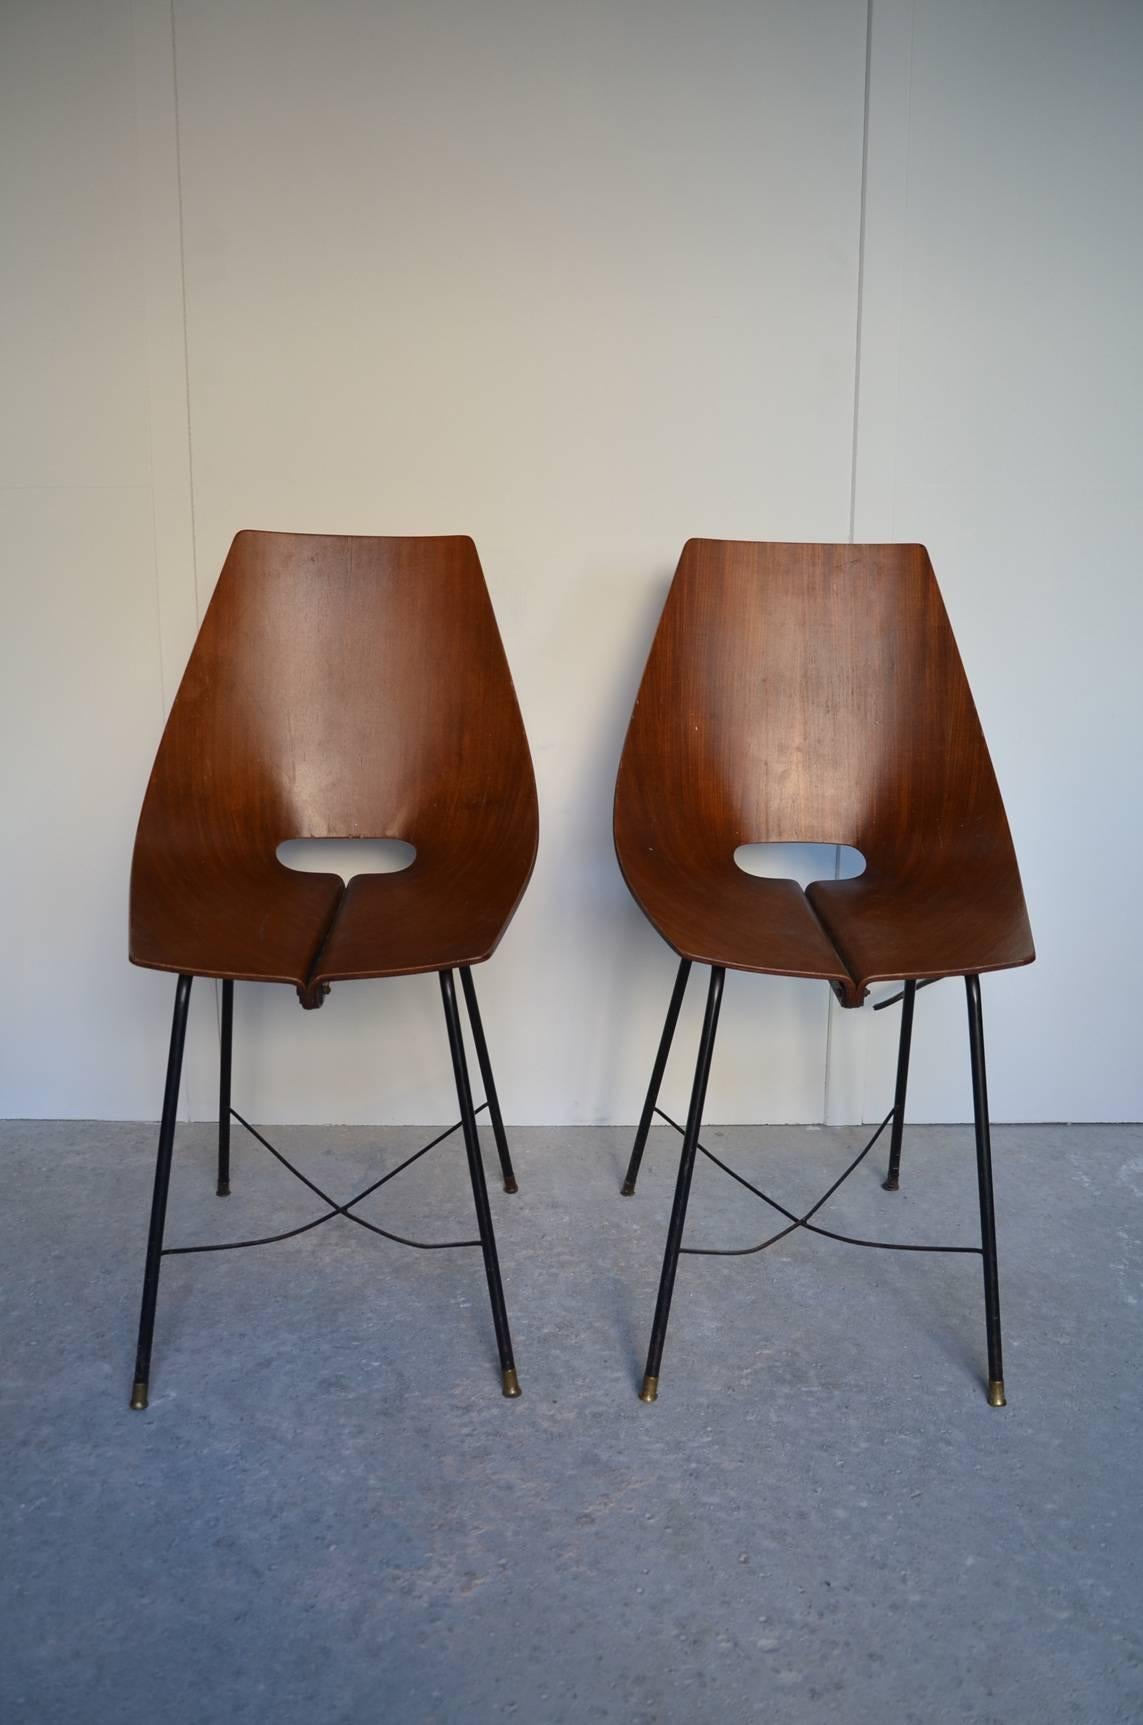 Beautiful set of two Italian chairs designed by Carlo Ratti, circa 1960.